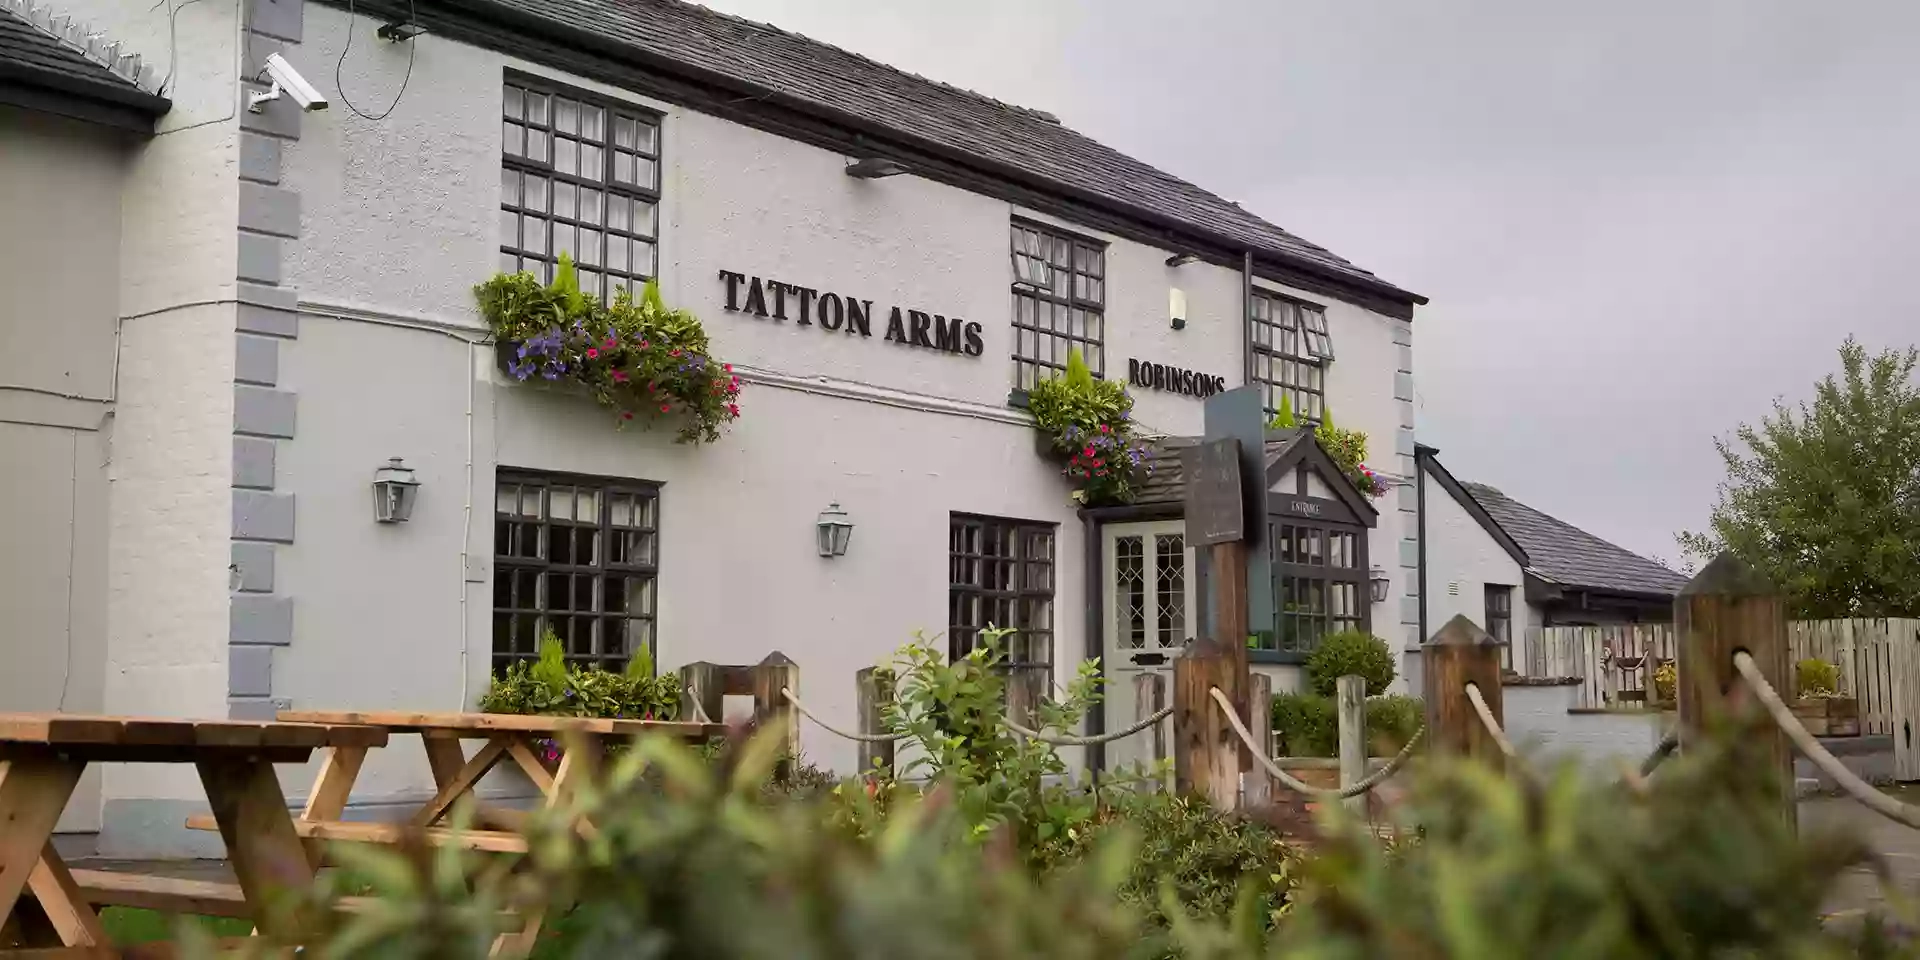 Tatton Arms, Moss Nook